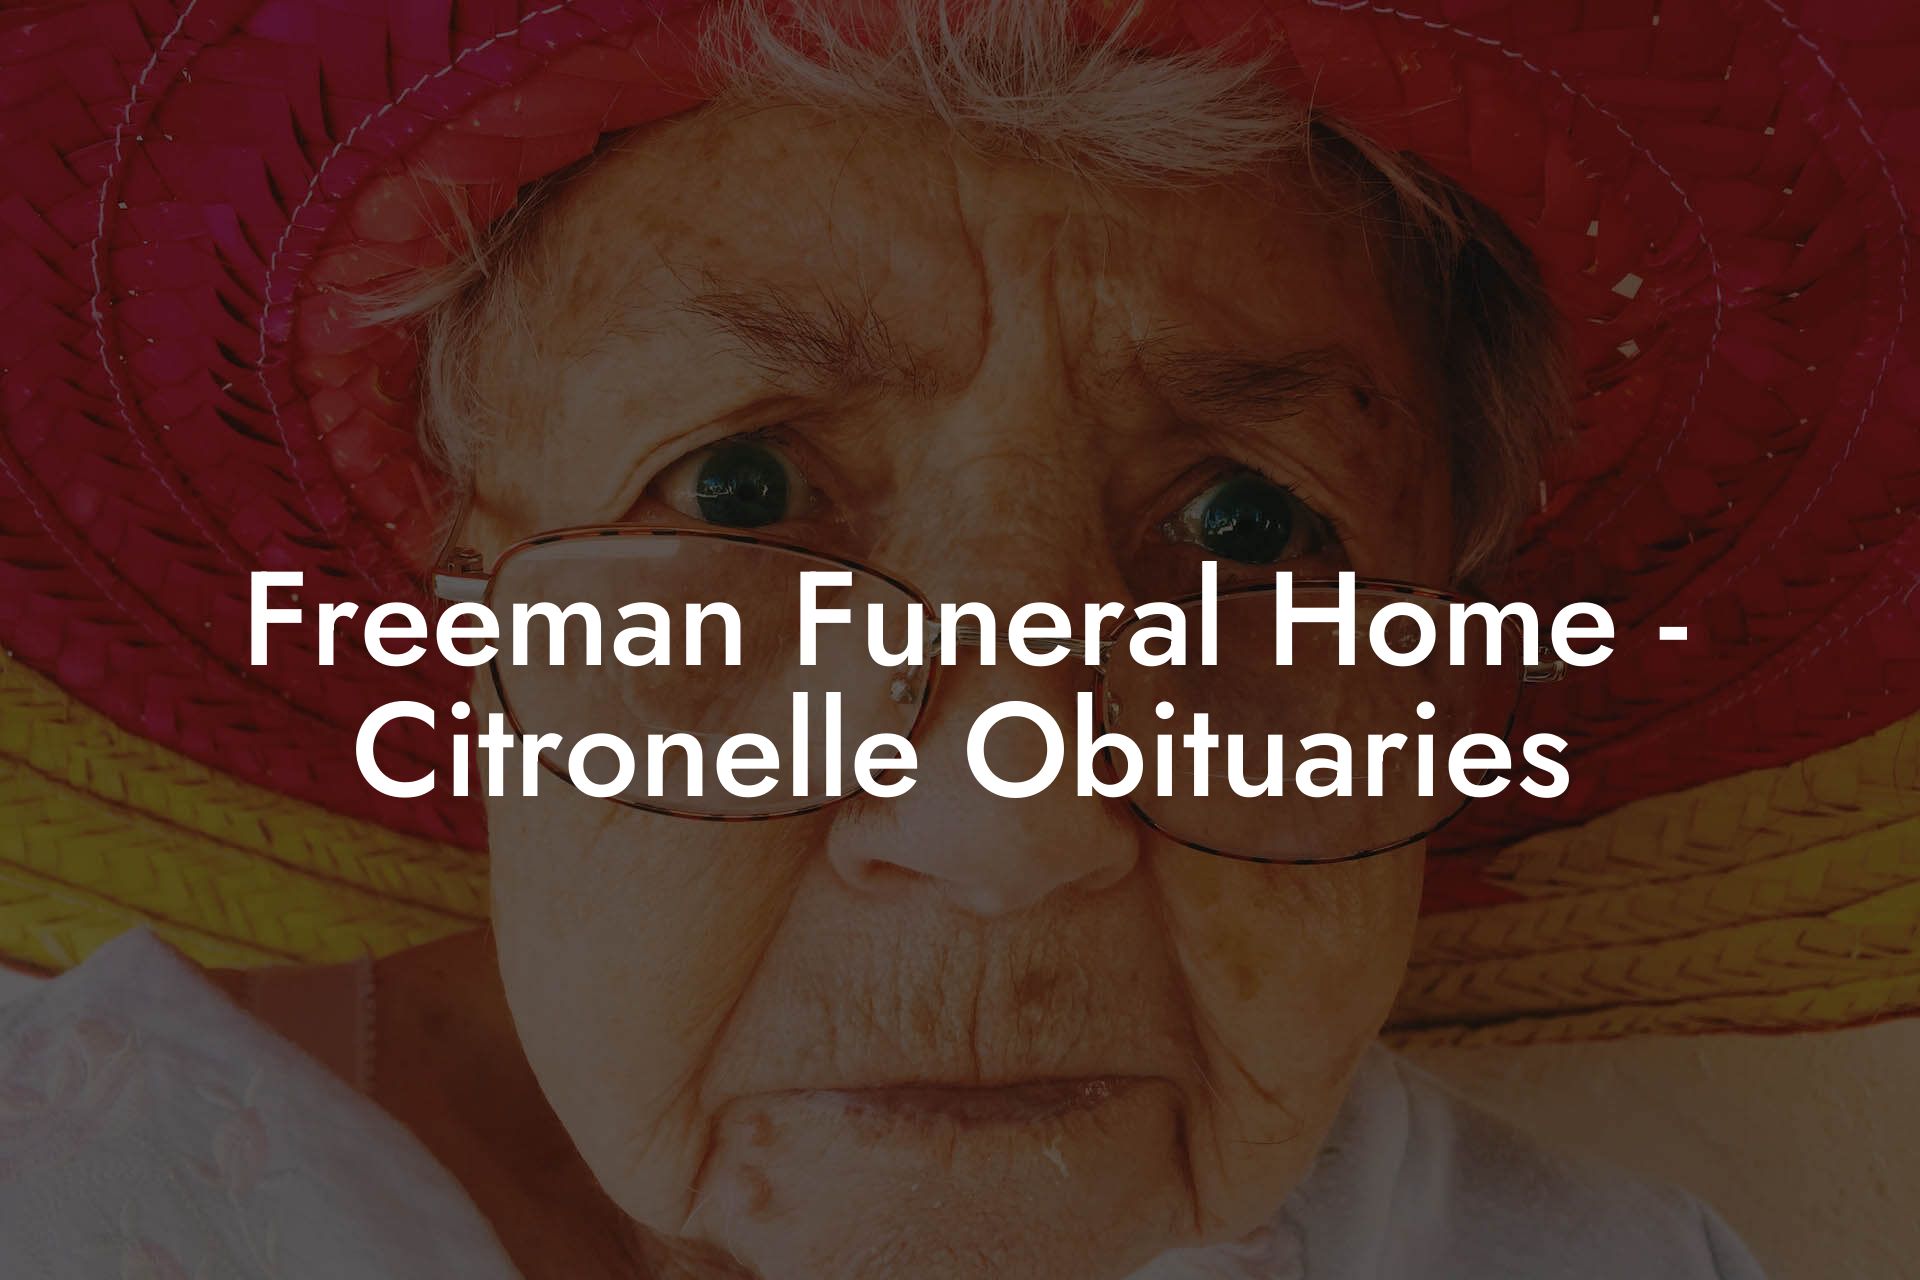 Freeman Funeral Home - Citronelle Obituaries